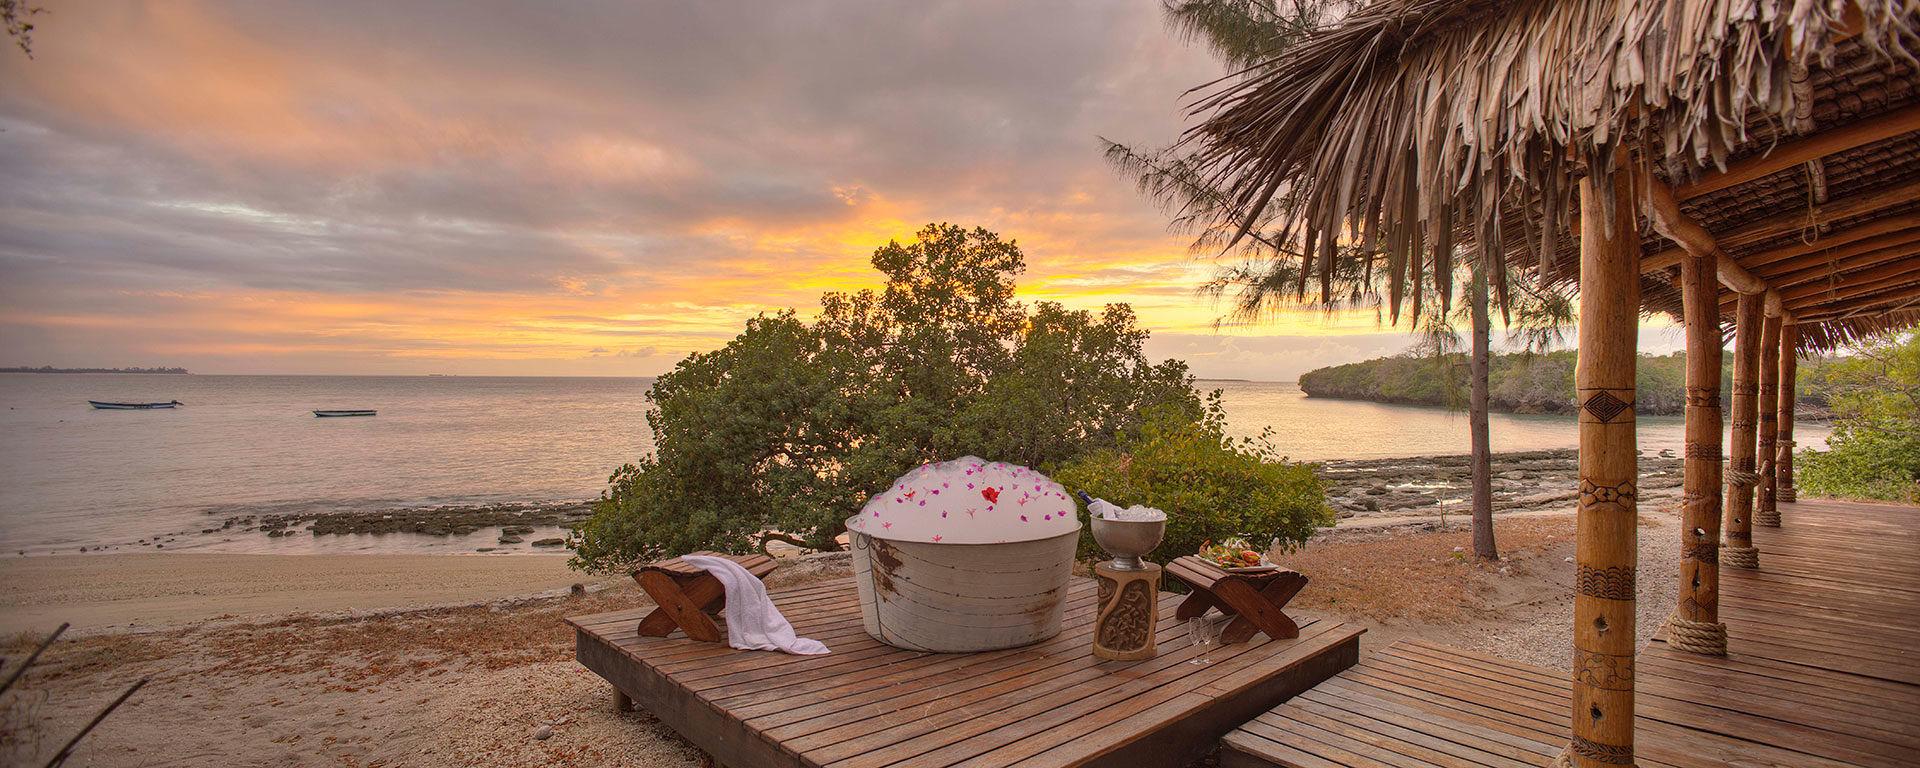 15days-romantic-chobe-deltaandmozambique-island-hlying-holiday